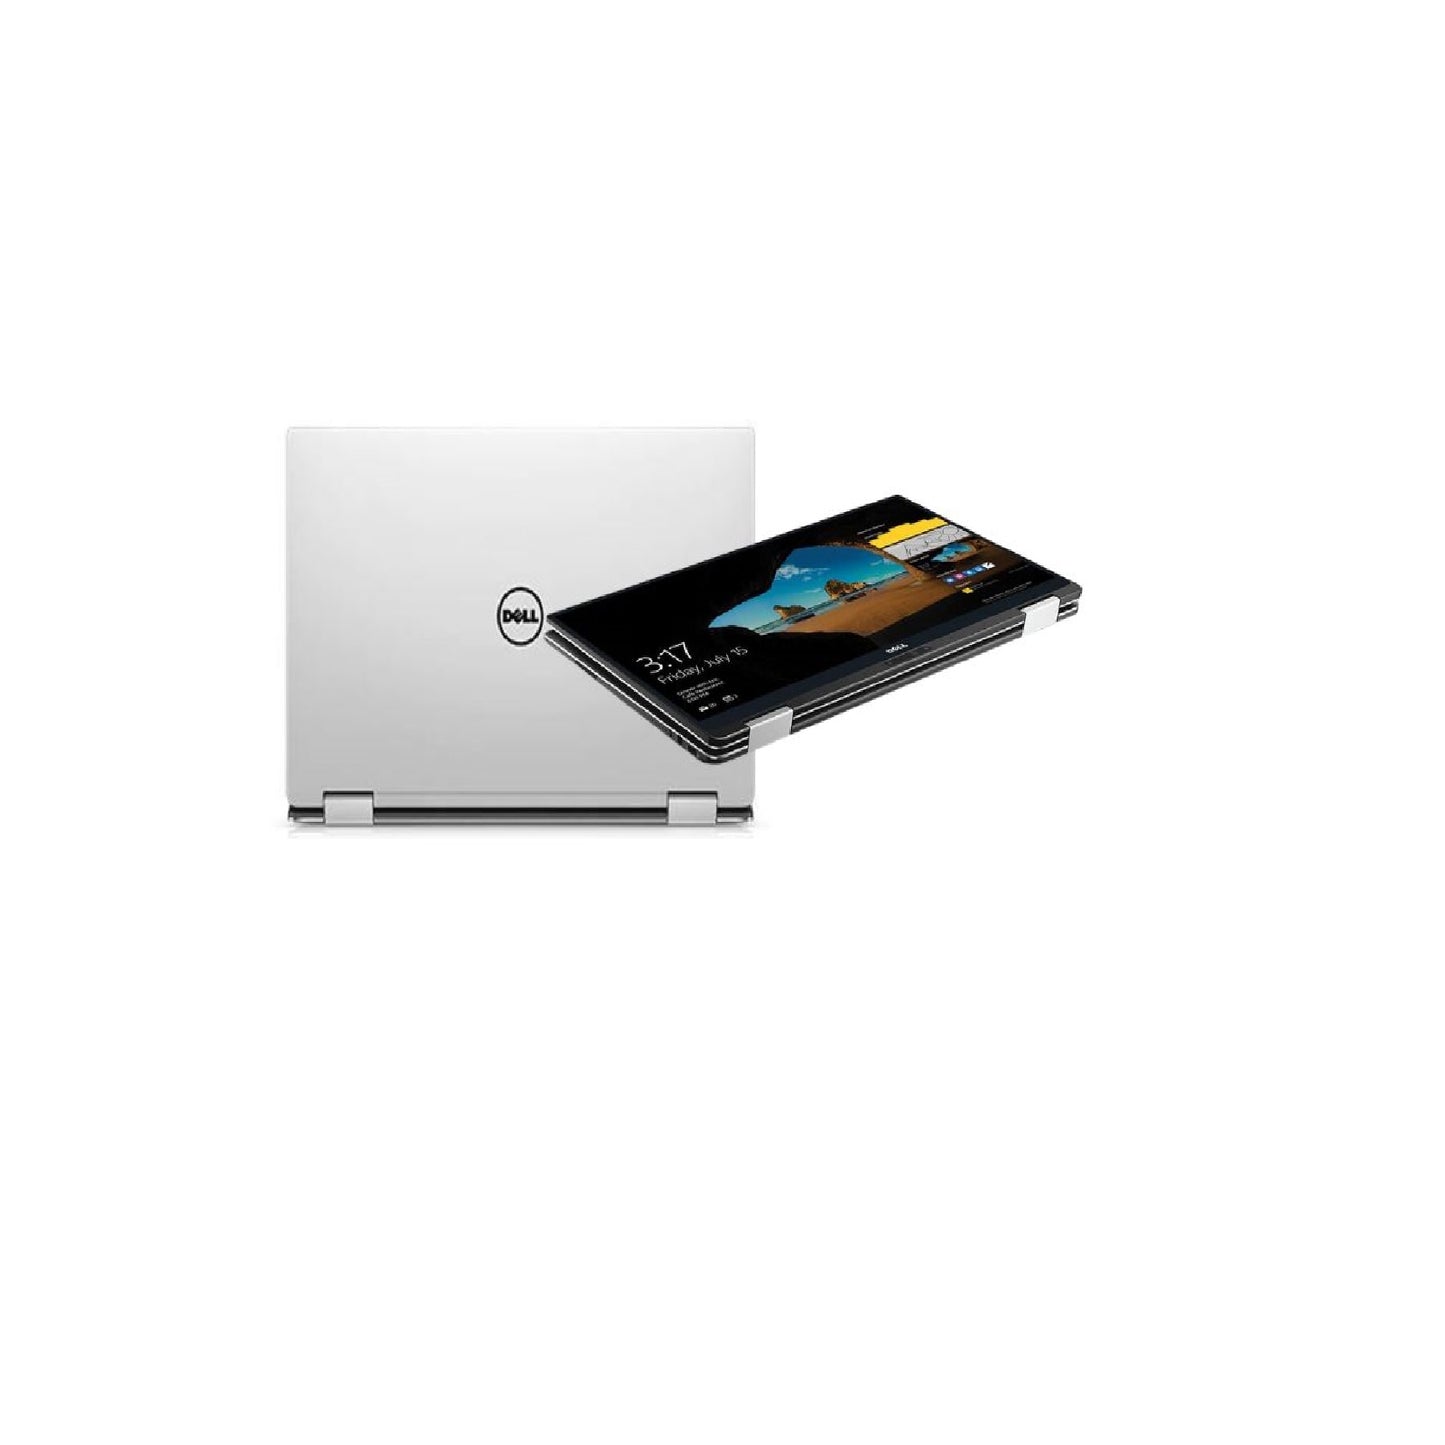 Dell XPS 13 9365 2-in-1-13.3 Inch Touch Screen Laptop - Intel Core I7 Gen 8 - 8GB - Intel(R) HD Graphics 615 - Windows 11